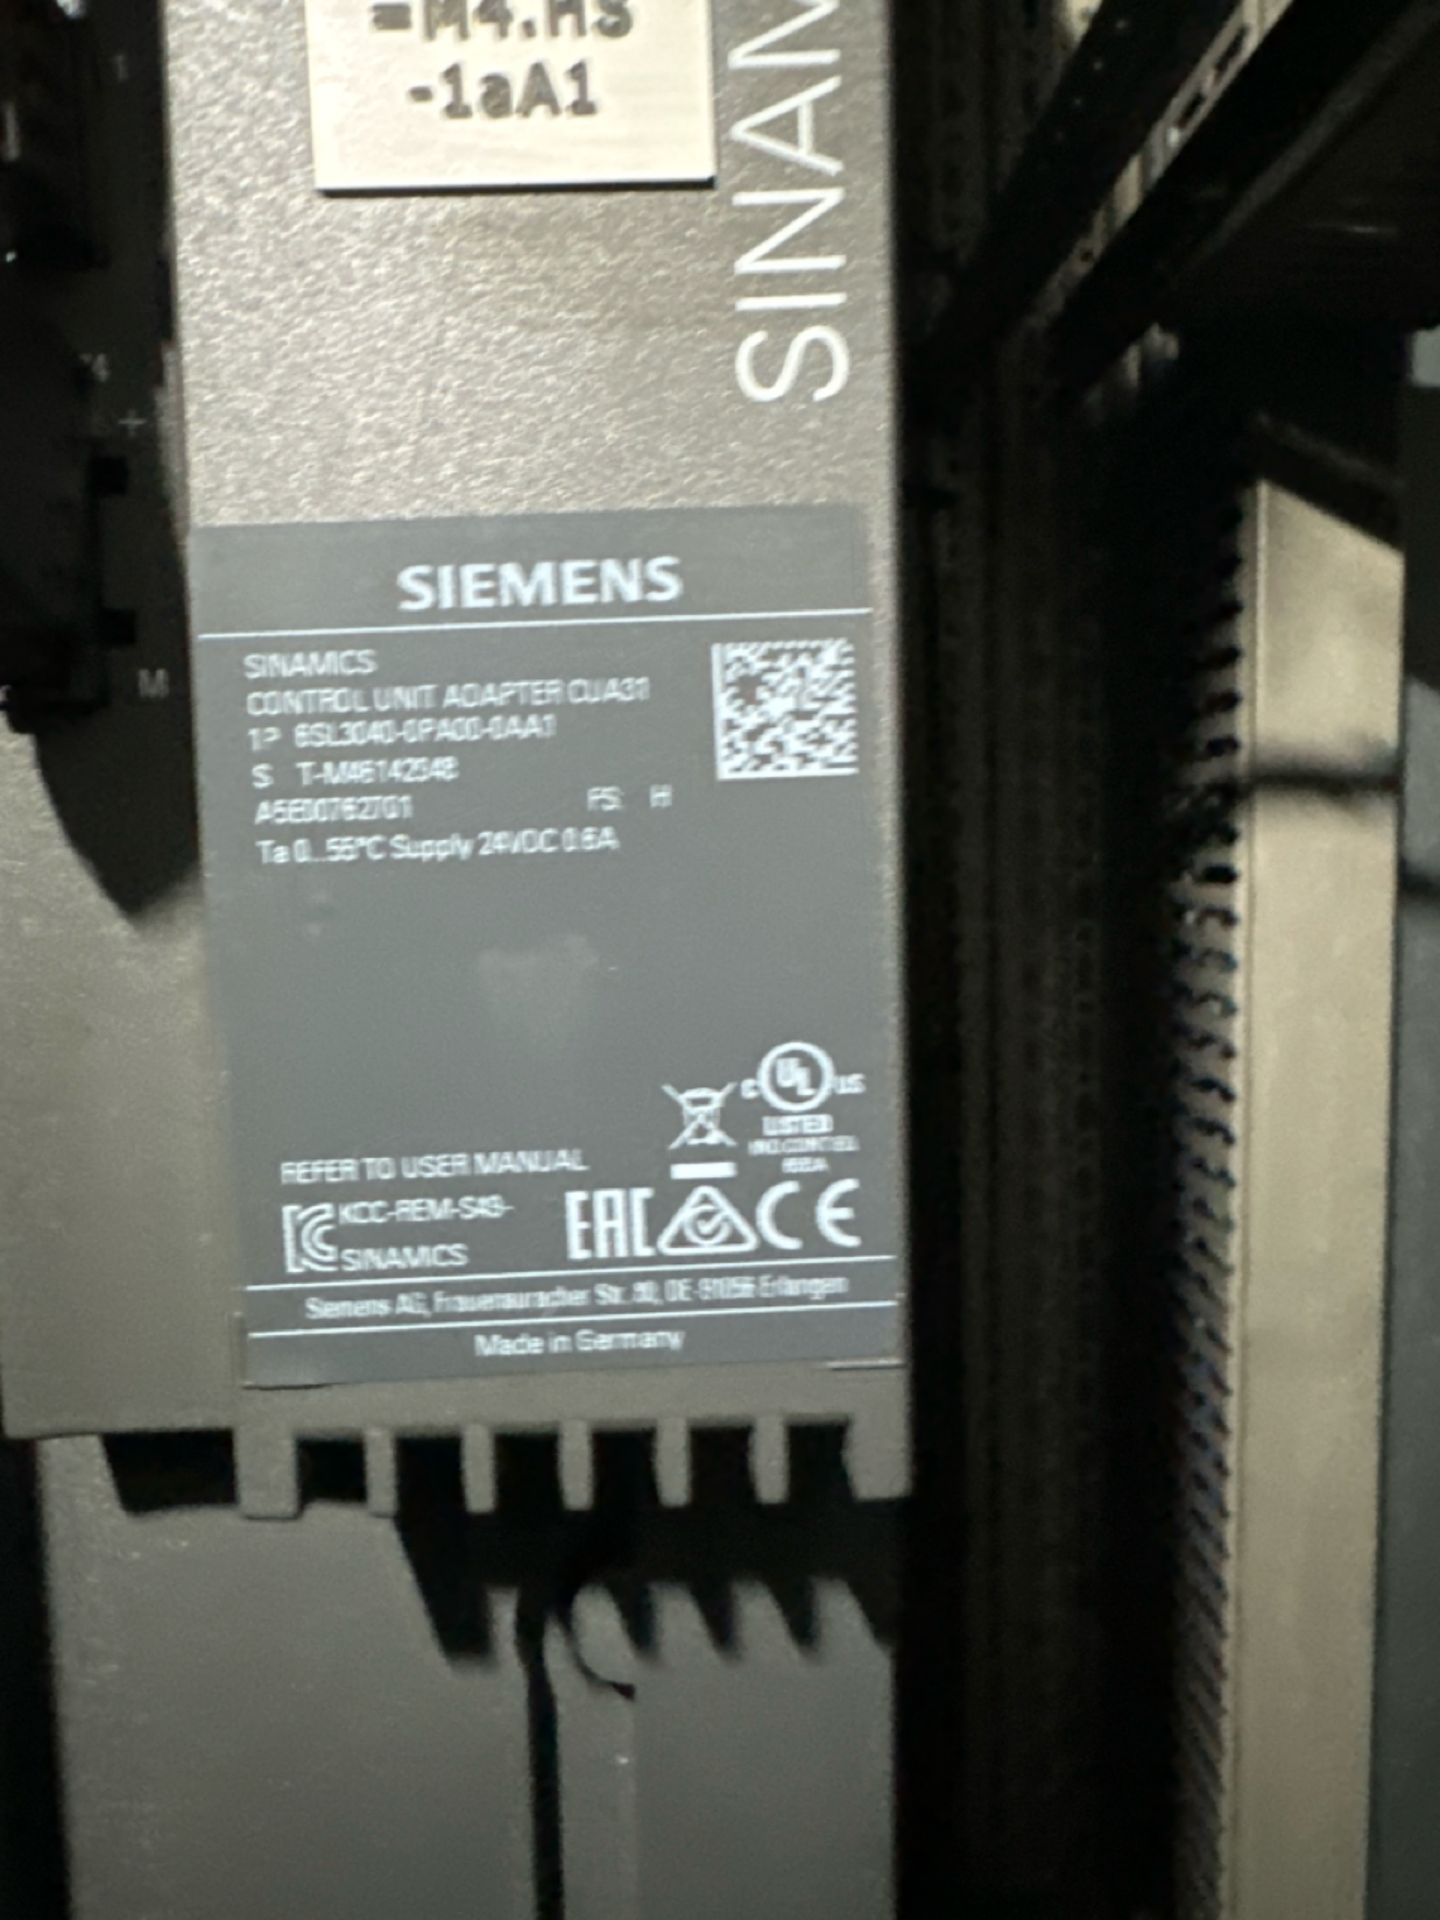 Siemens Sinamics Control Adapter CUA31 Power Module PM240-2 - Image 3 of 3